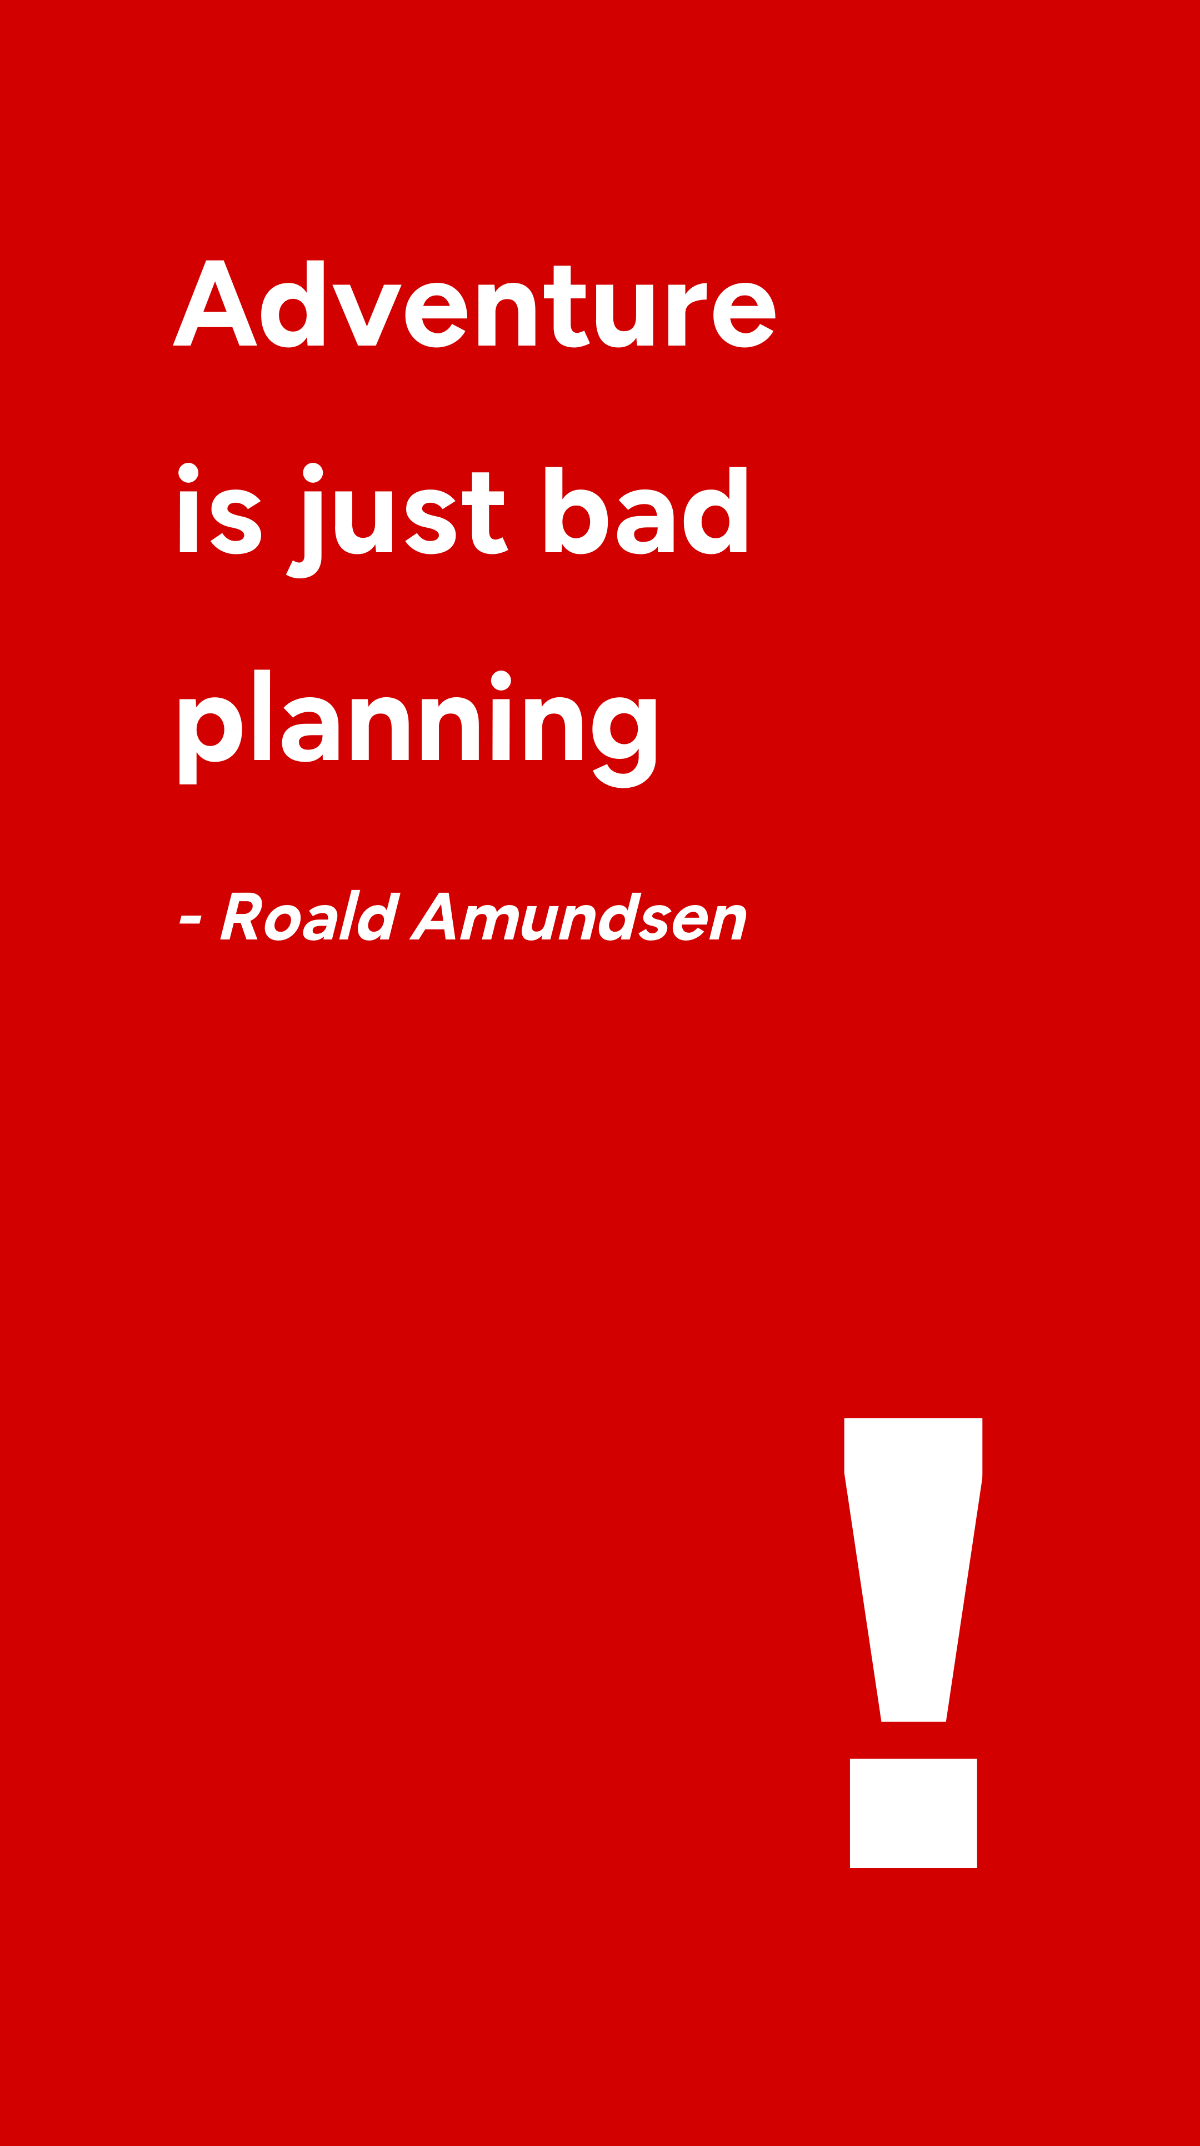 Free Roald Amundsen - Adventure is just bad planning Template